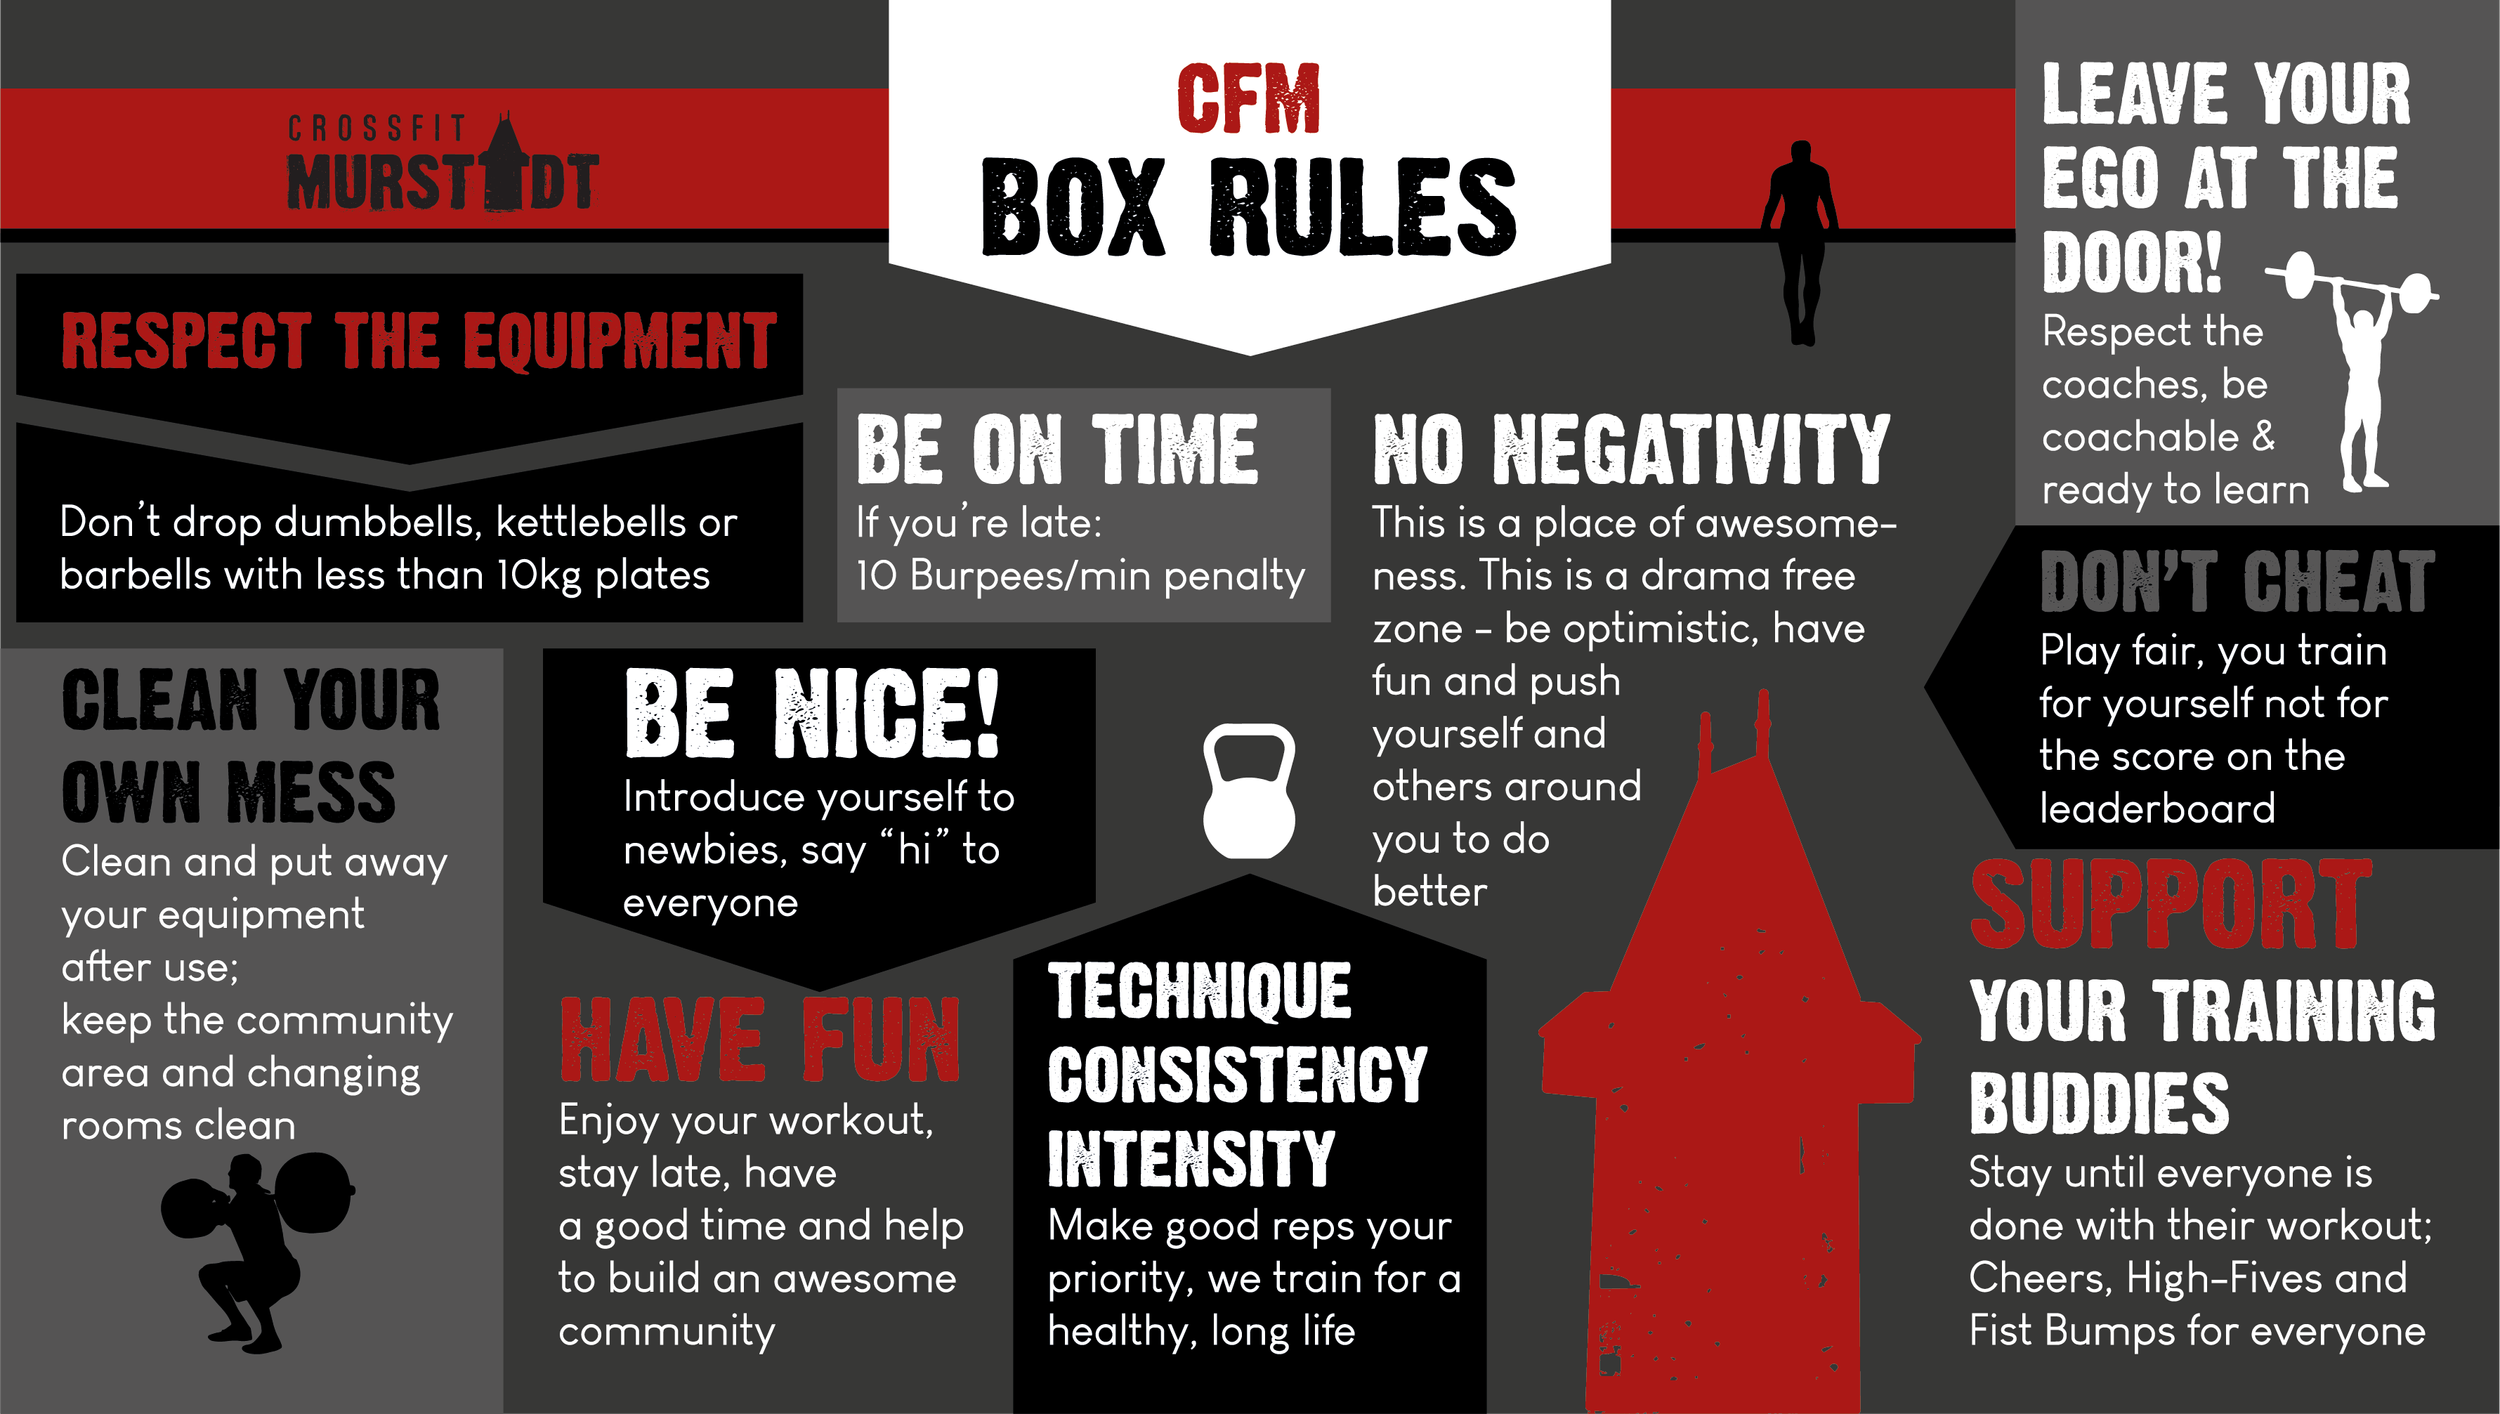 CFM Box Rules_finale Version.png